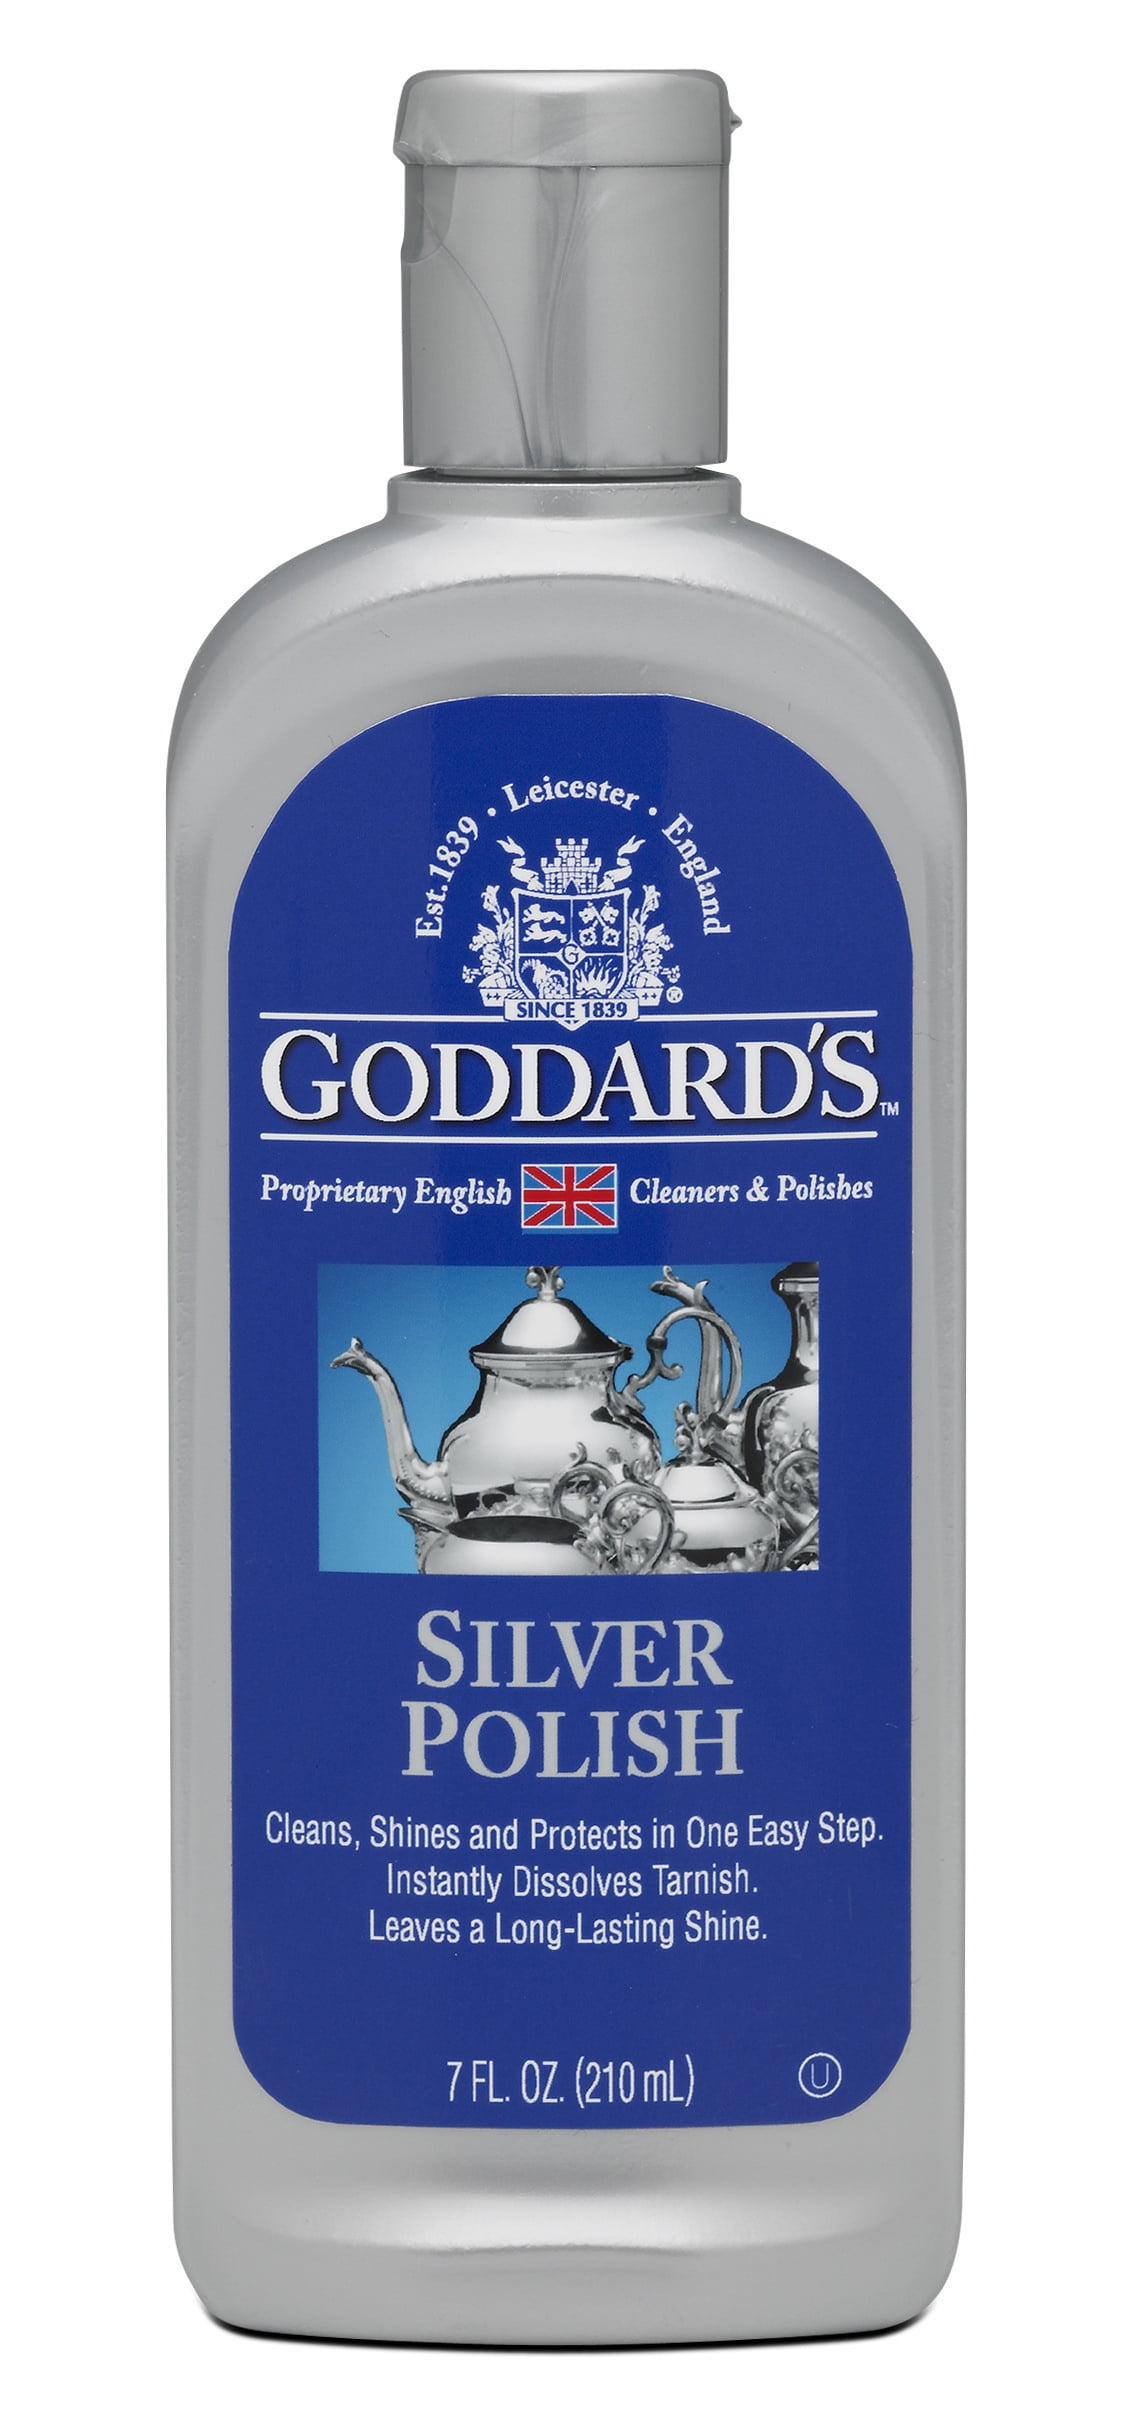 Goddard's Mild Scent Silver Polish 1 wipes Cloth